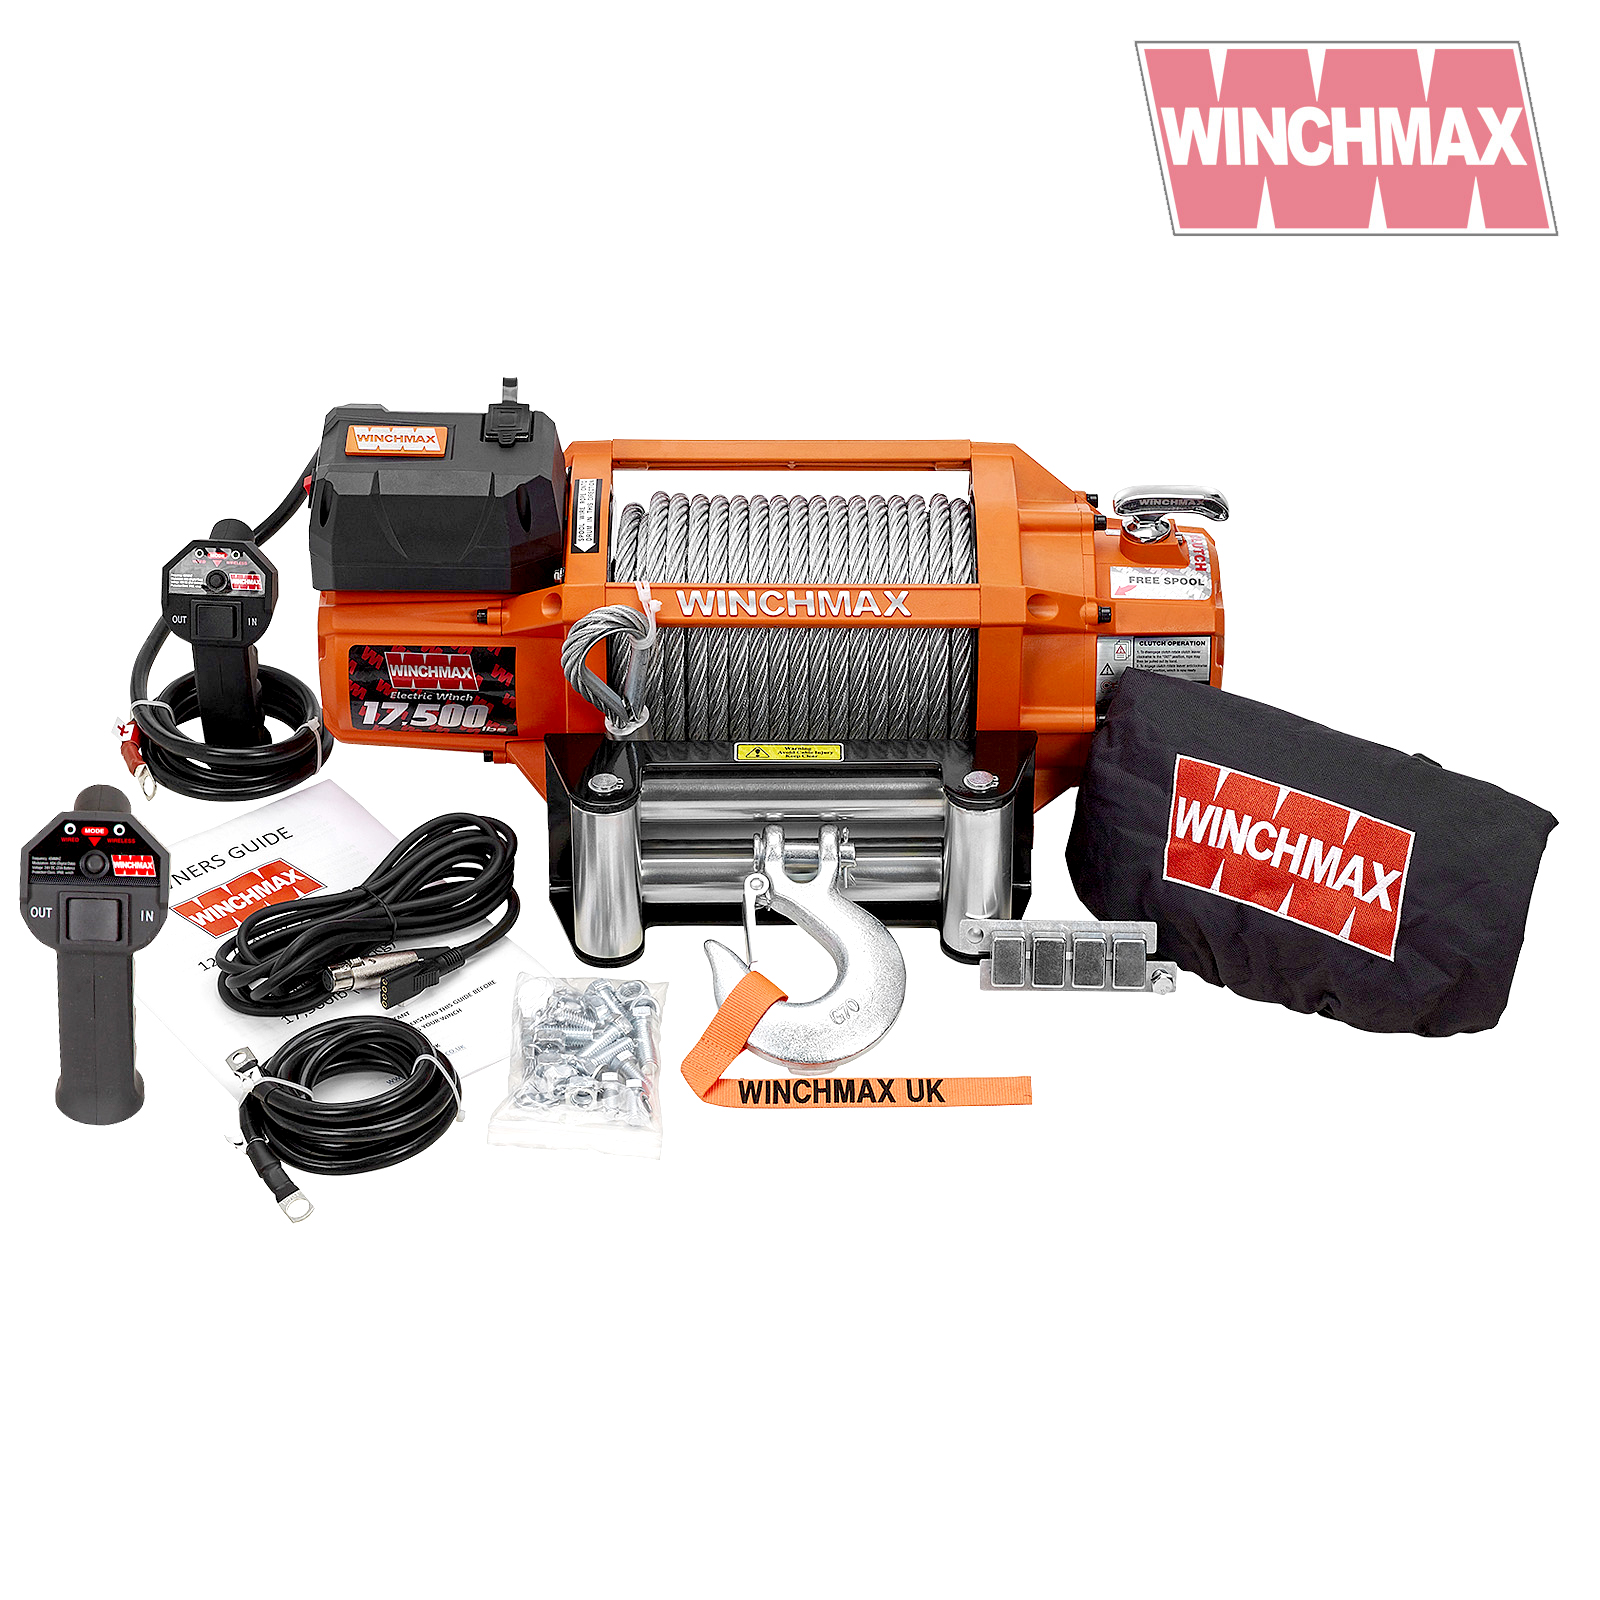 WINCHMAX 17500lb 24v Winch